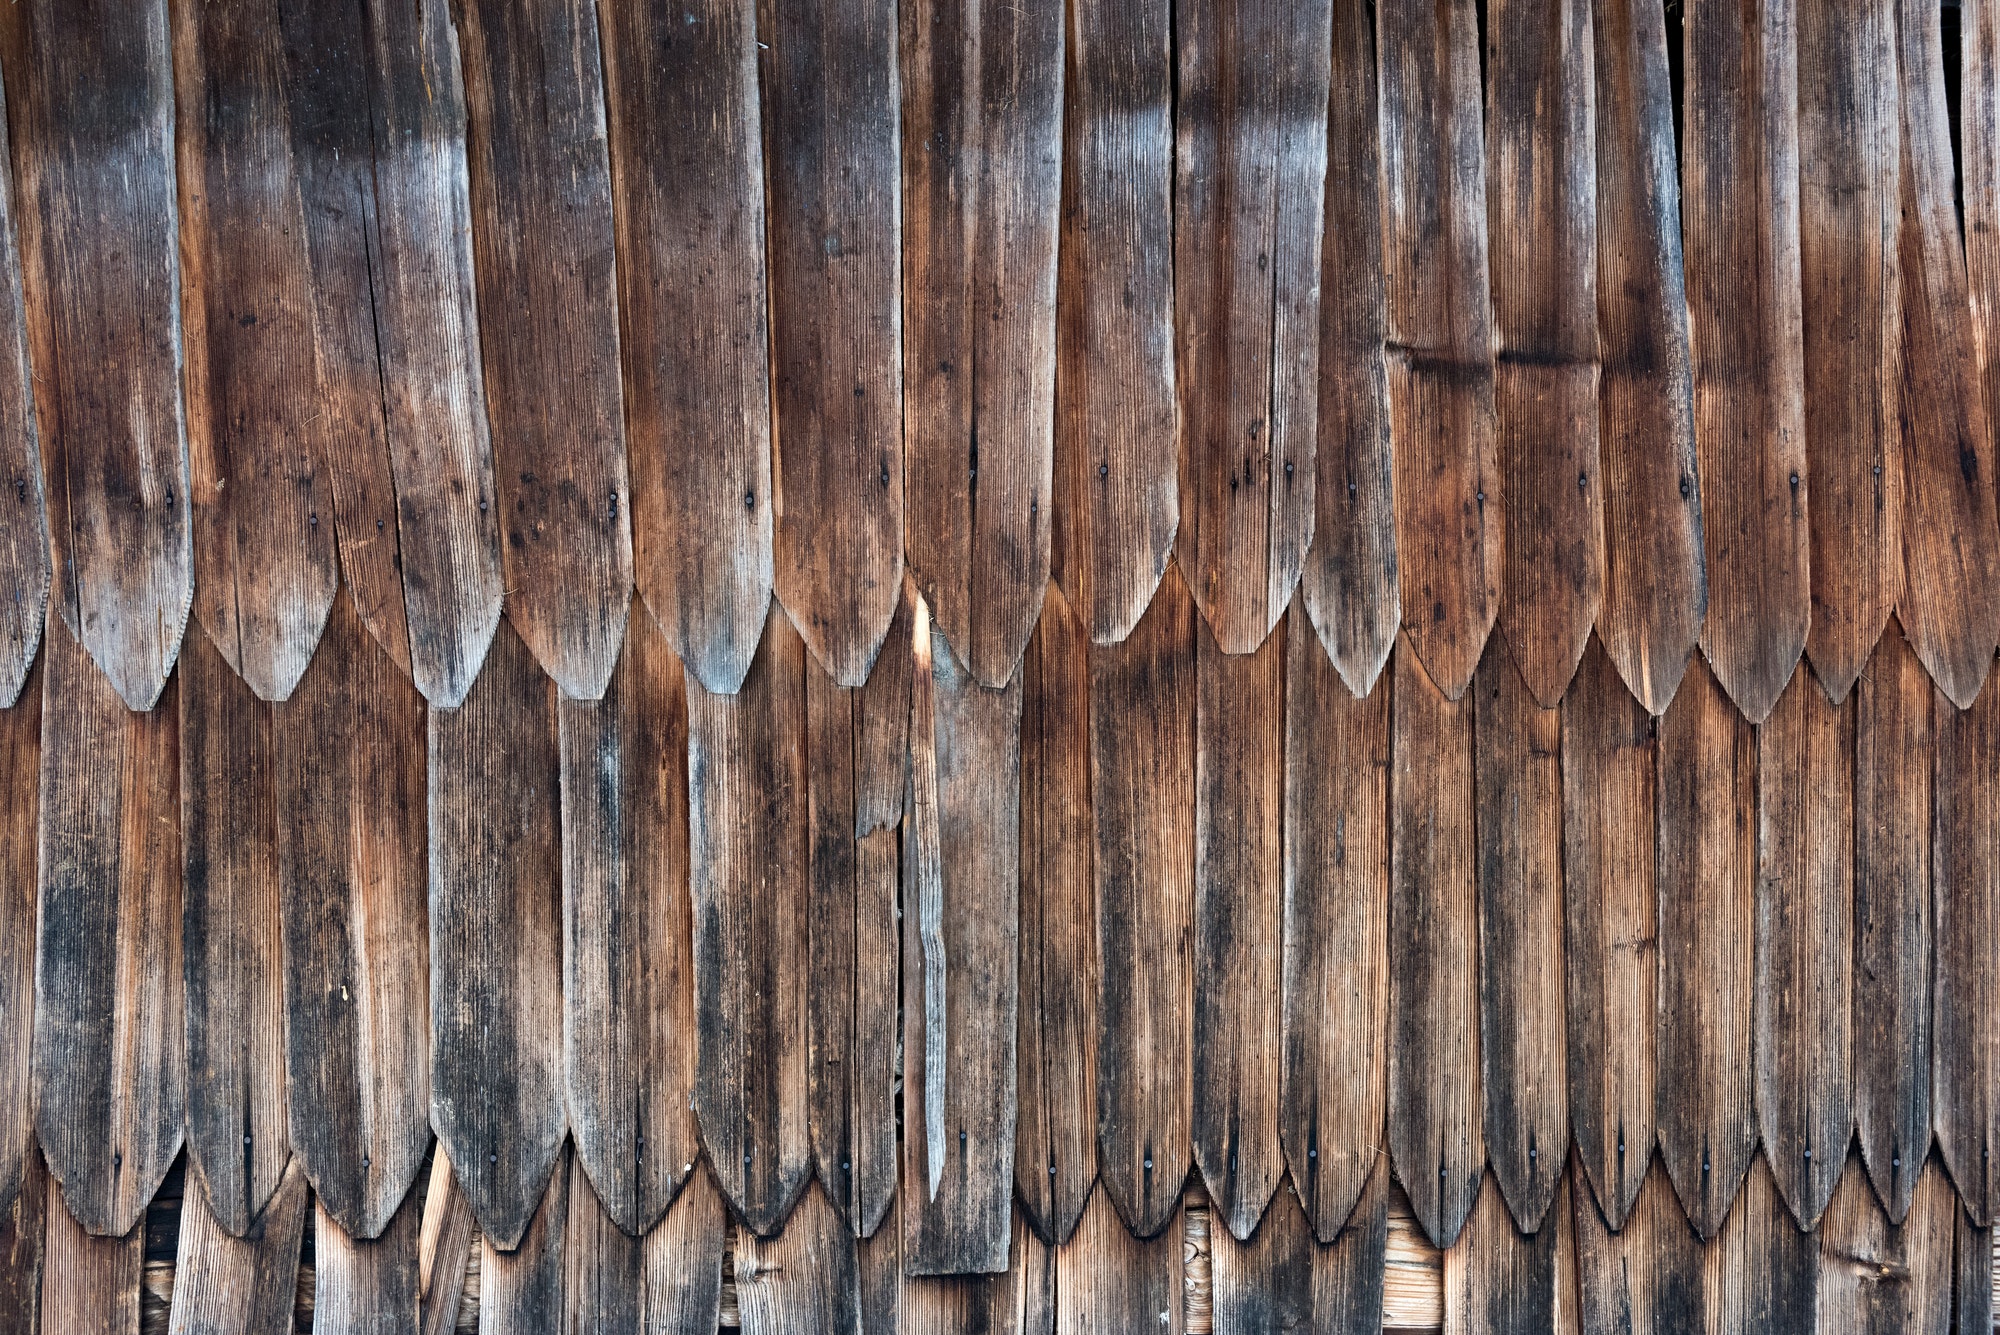 Wooden roof texture